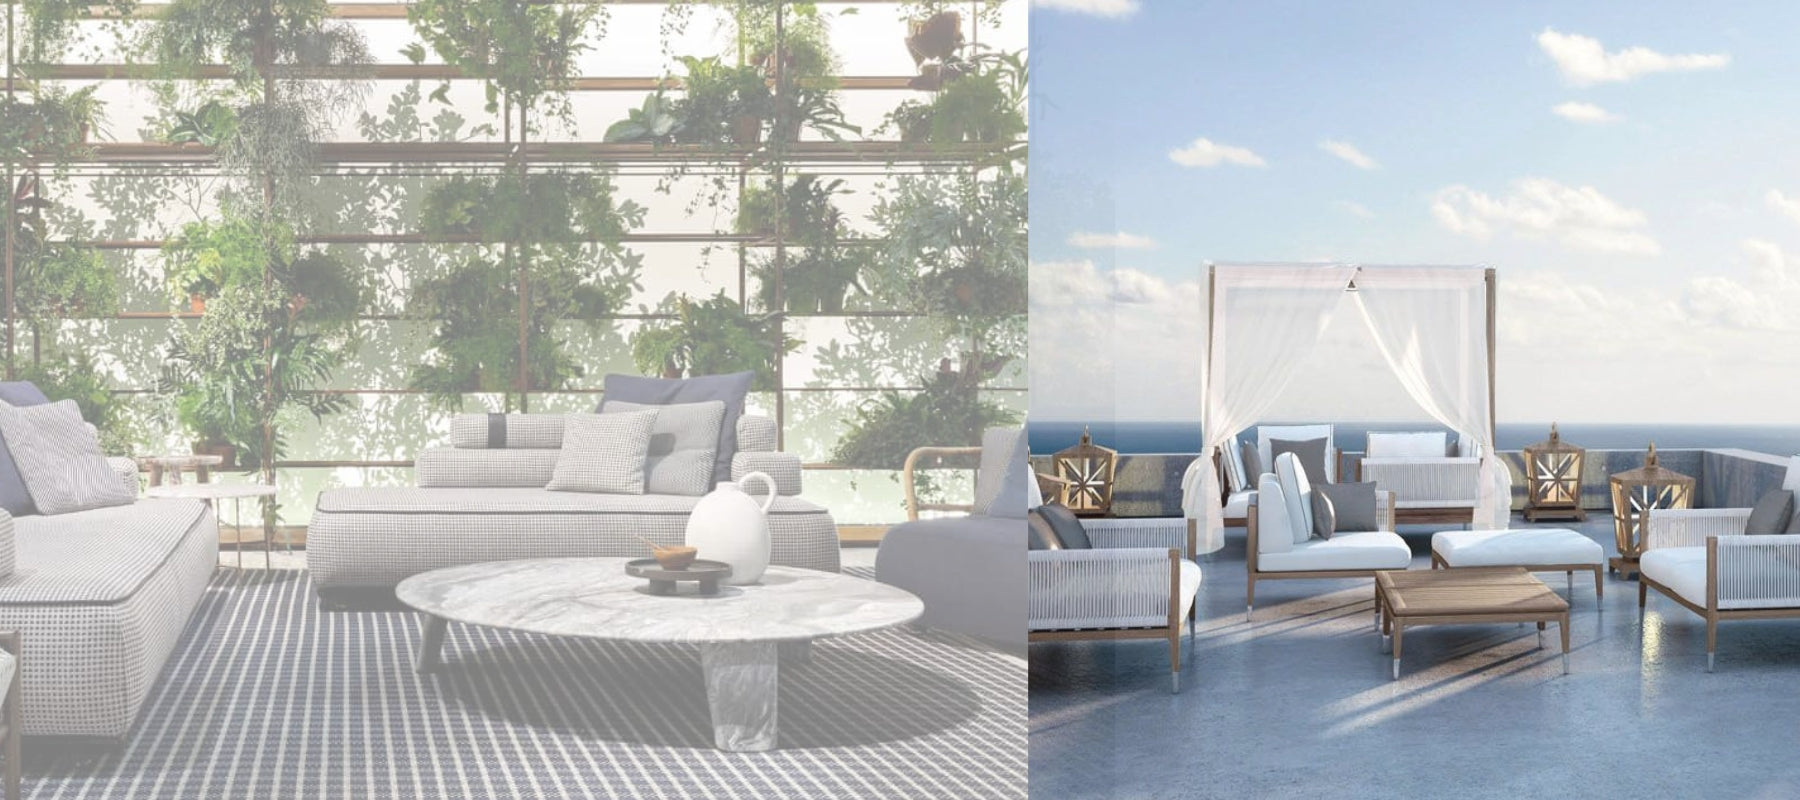 Elegant-interior-Luxury-outdoor-furniture-collection-1800x800